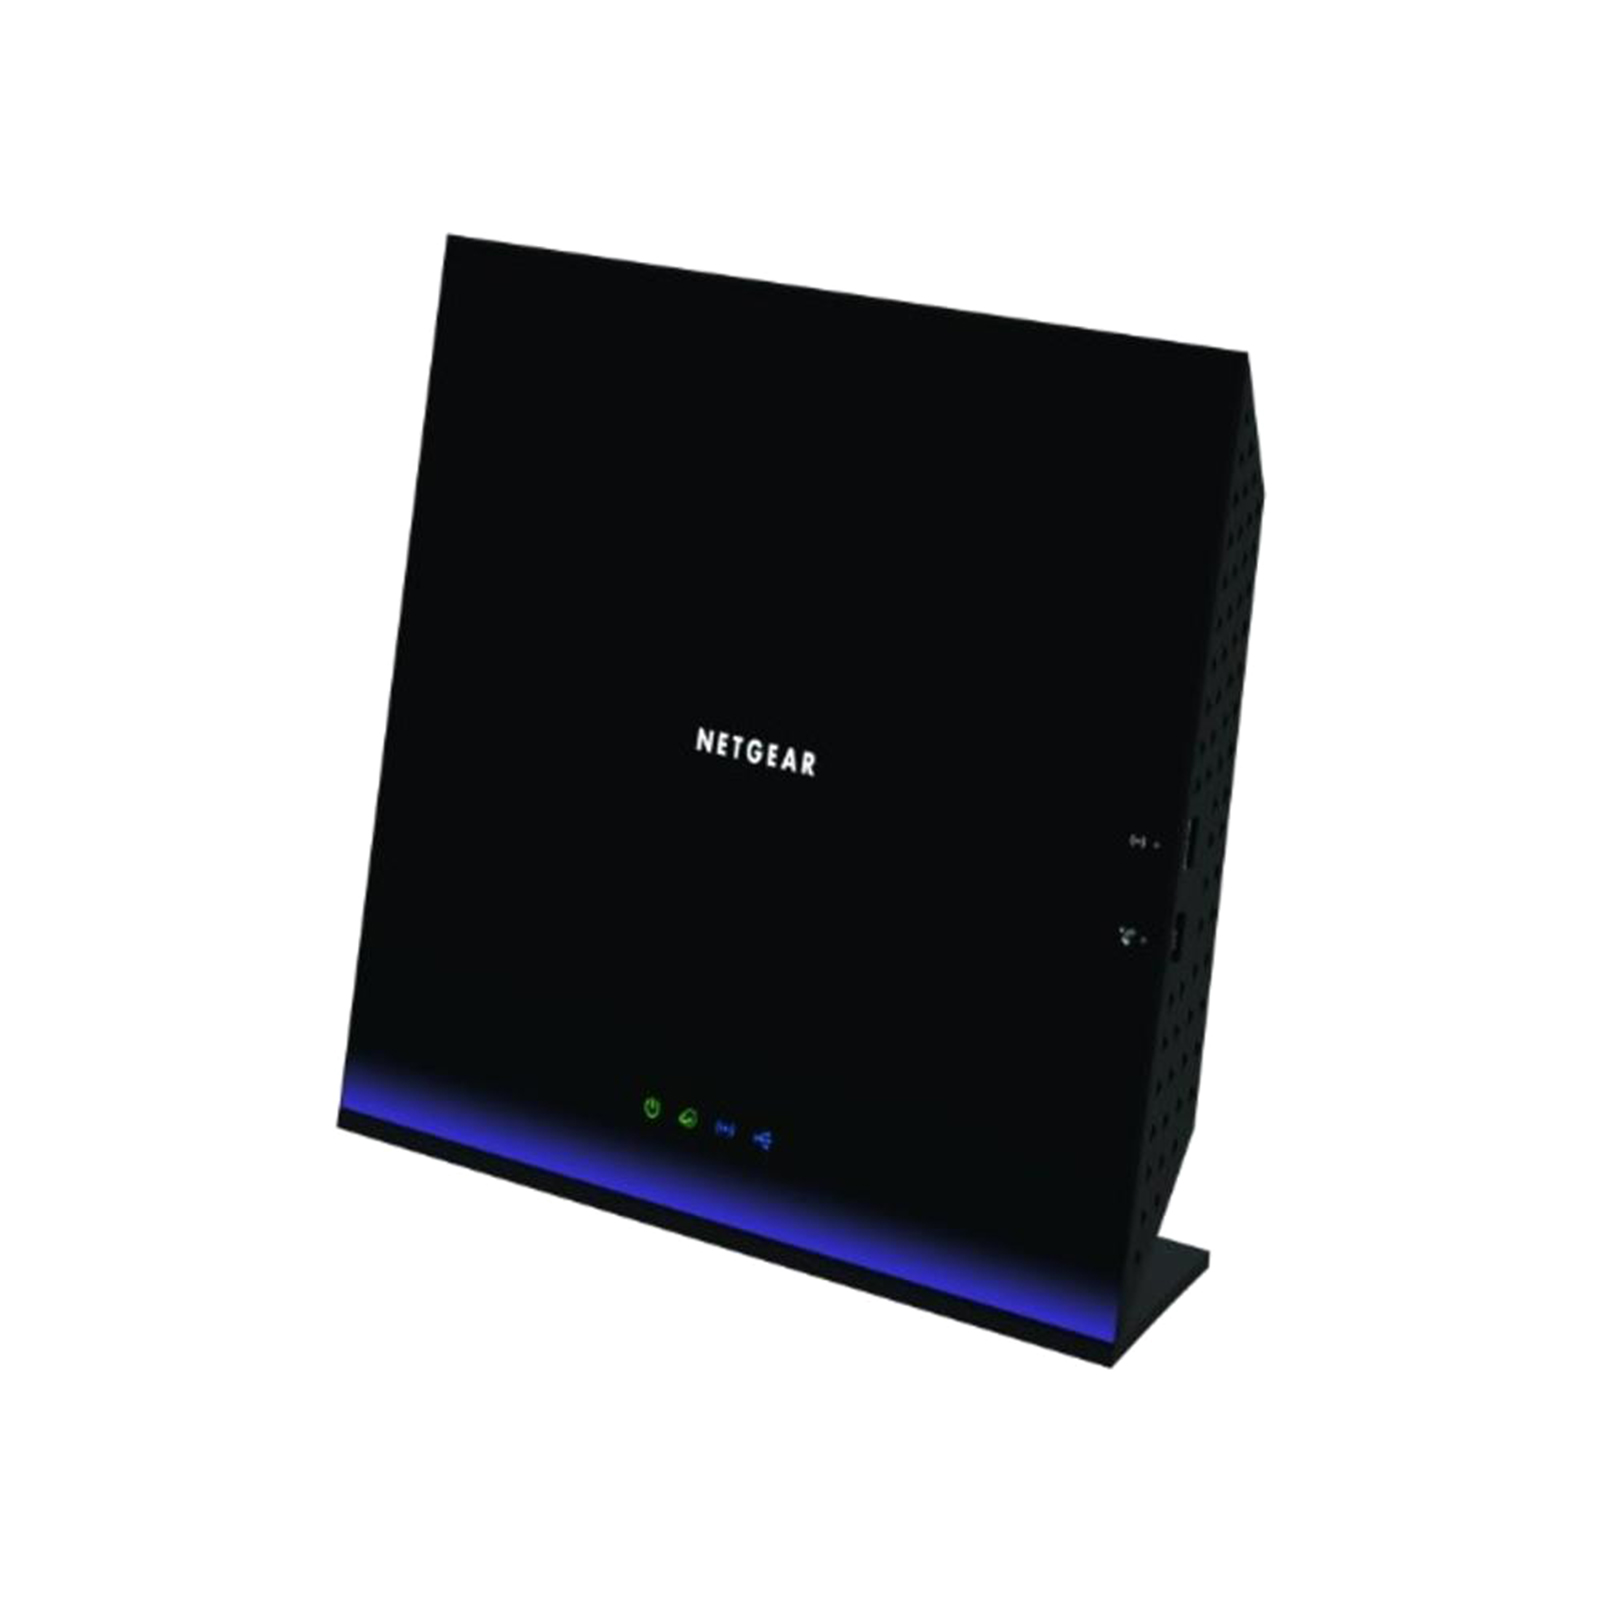 Netgear R6250-100NAS  Dual Band WiFi Gigabit Router